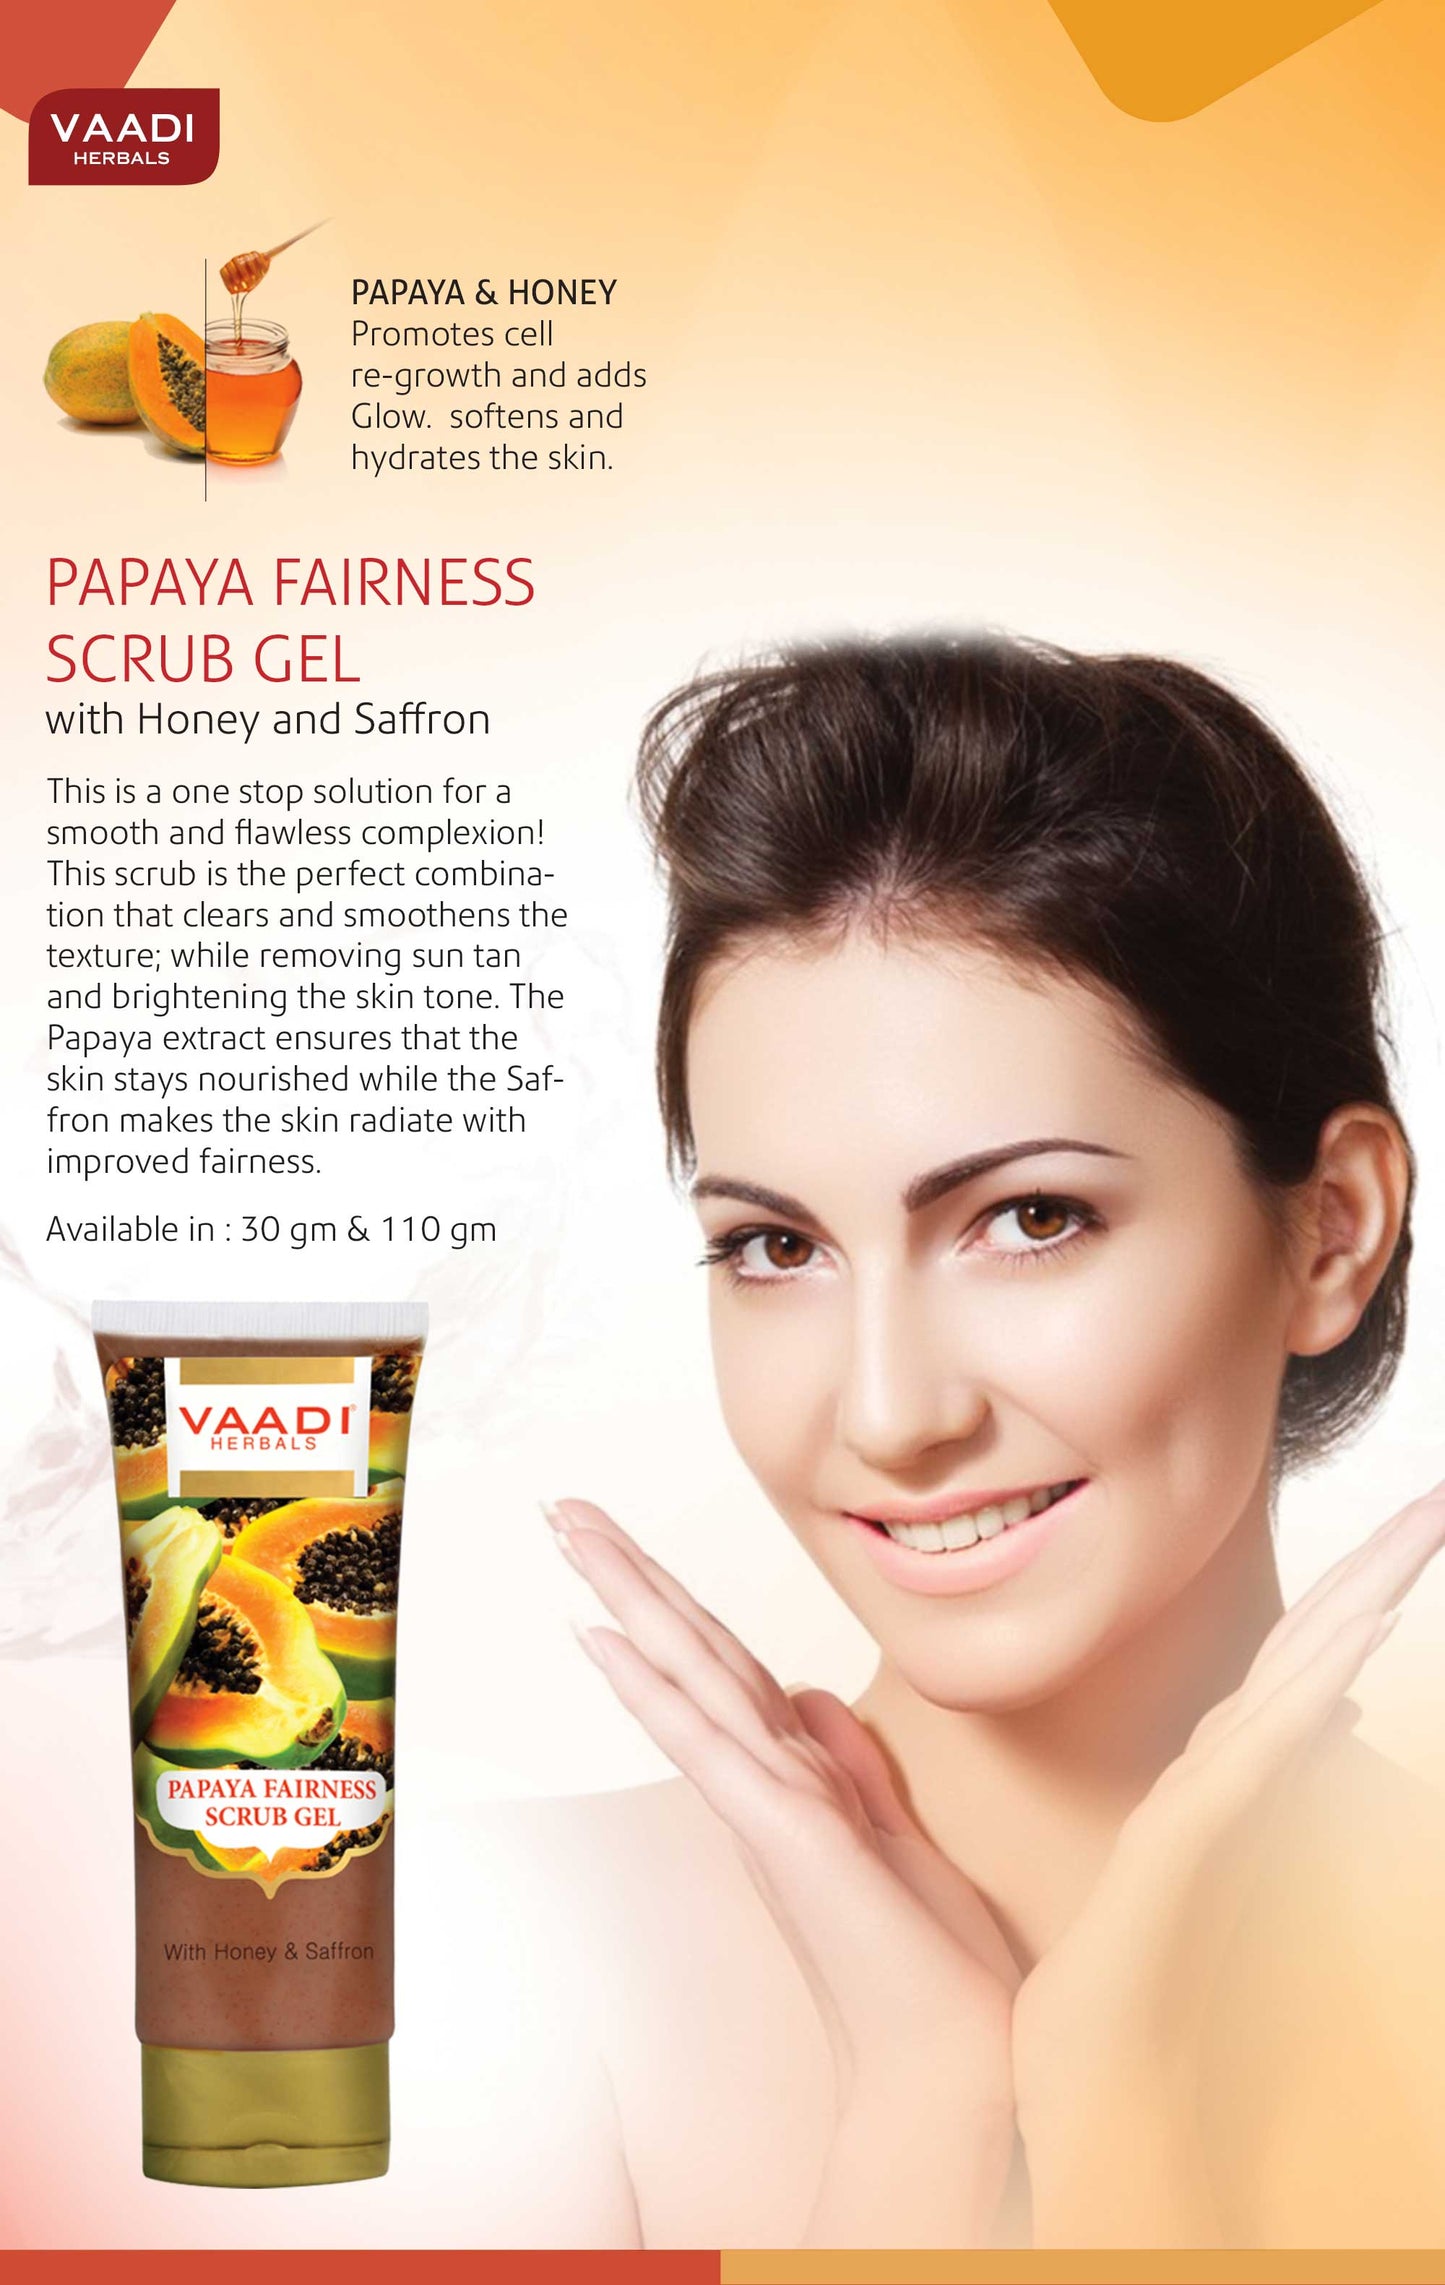 Organic Papaya Scrub Gel with Honey & Saffron - Reduces Tan - Smoothens Skin Texture - Makes Skin Flawless (2 x 110 gms /4 oz)